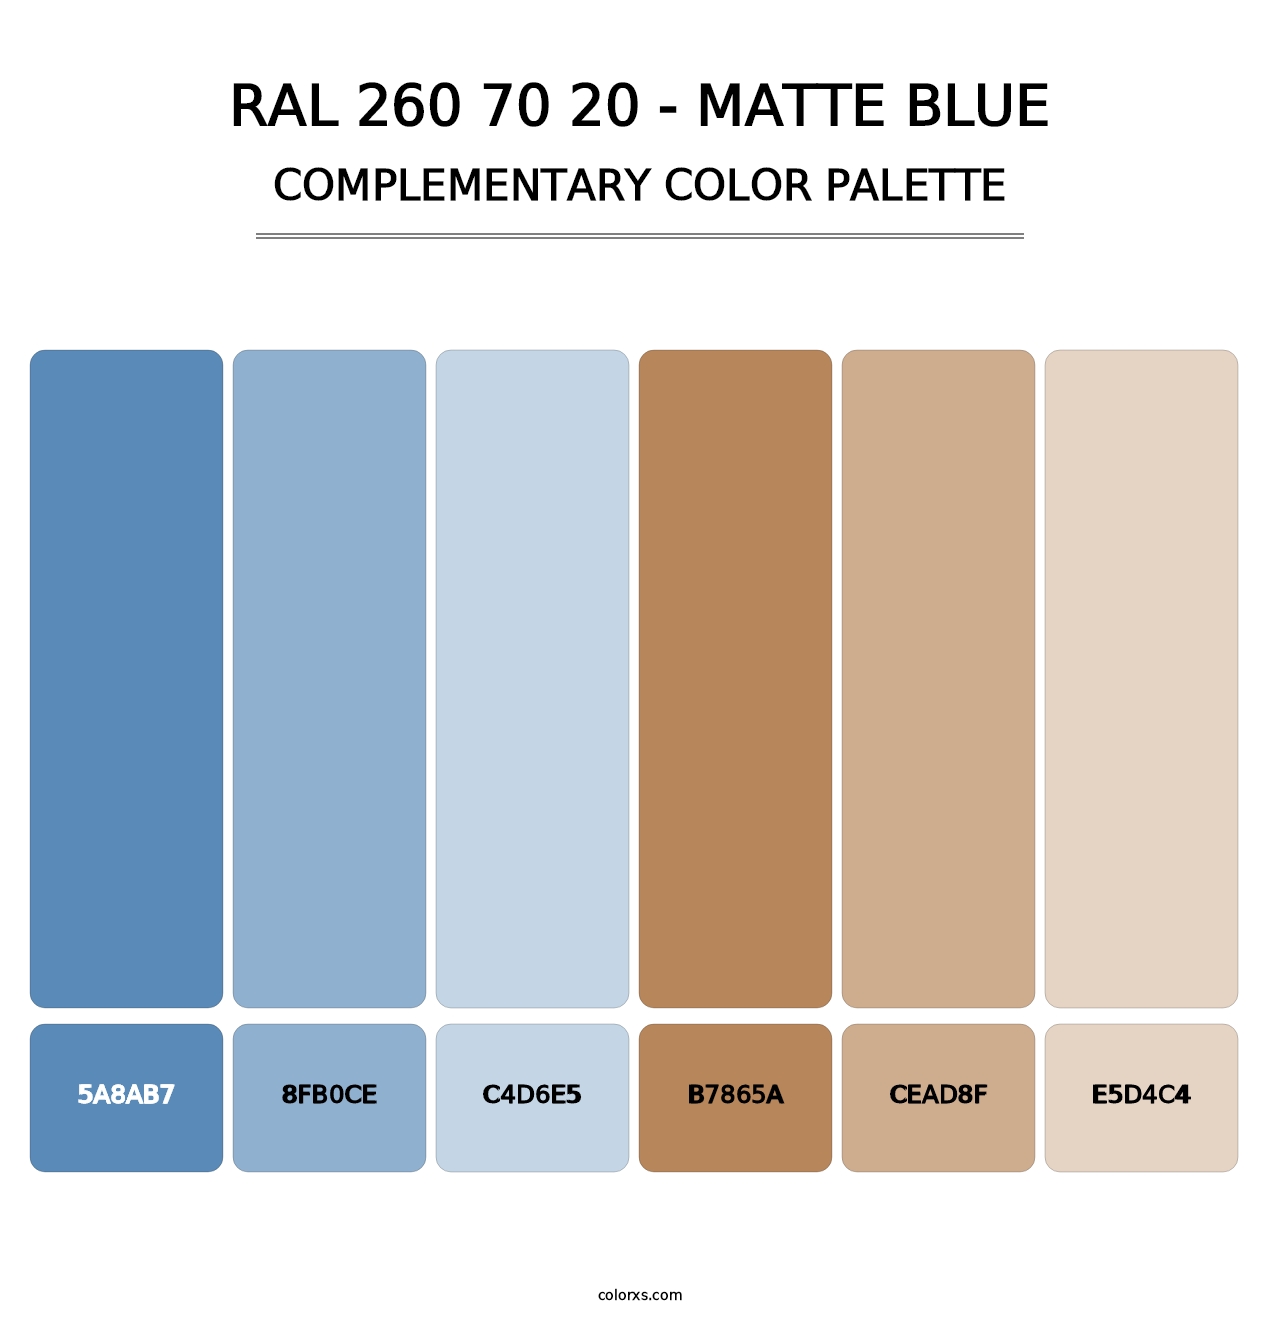 RAL 260 70 20 - Matte Blue - Complementary Color Palette